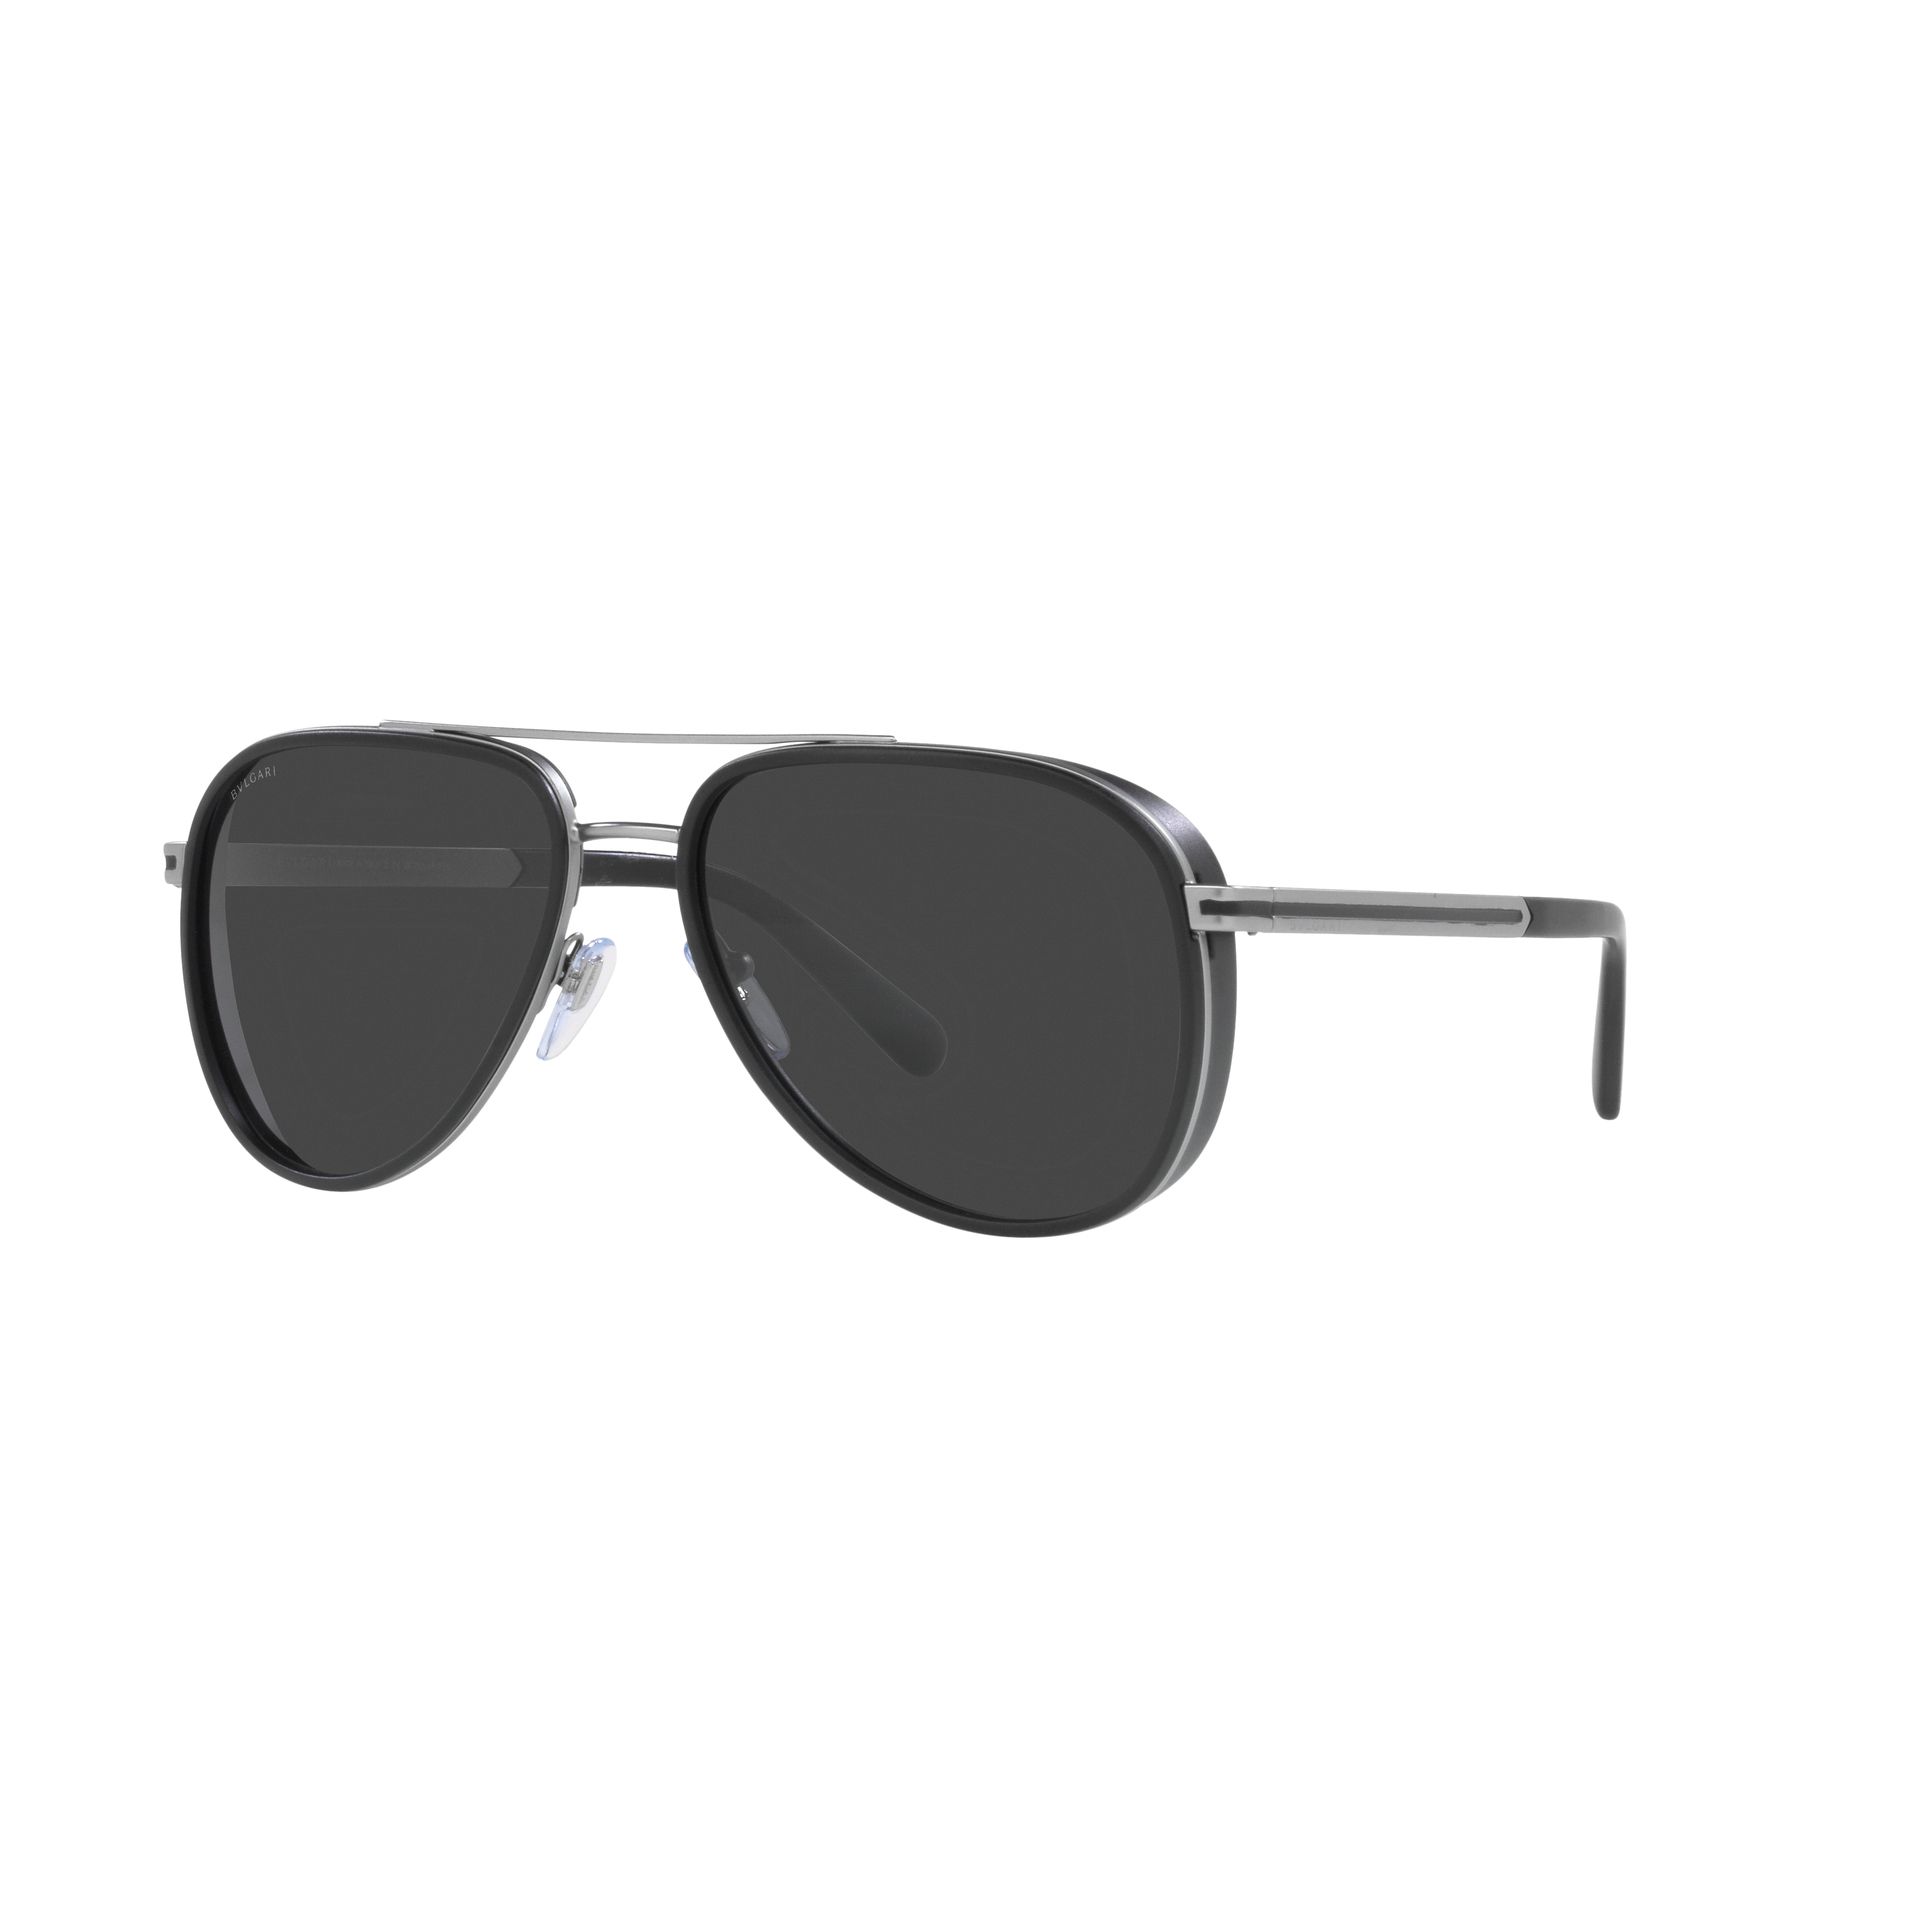 0BV5060 Pilot Sunglasses 195 48 - size 57